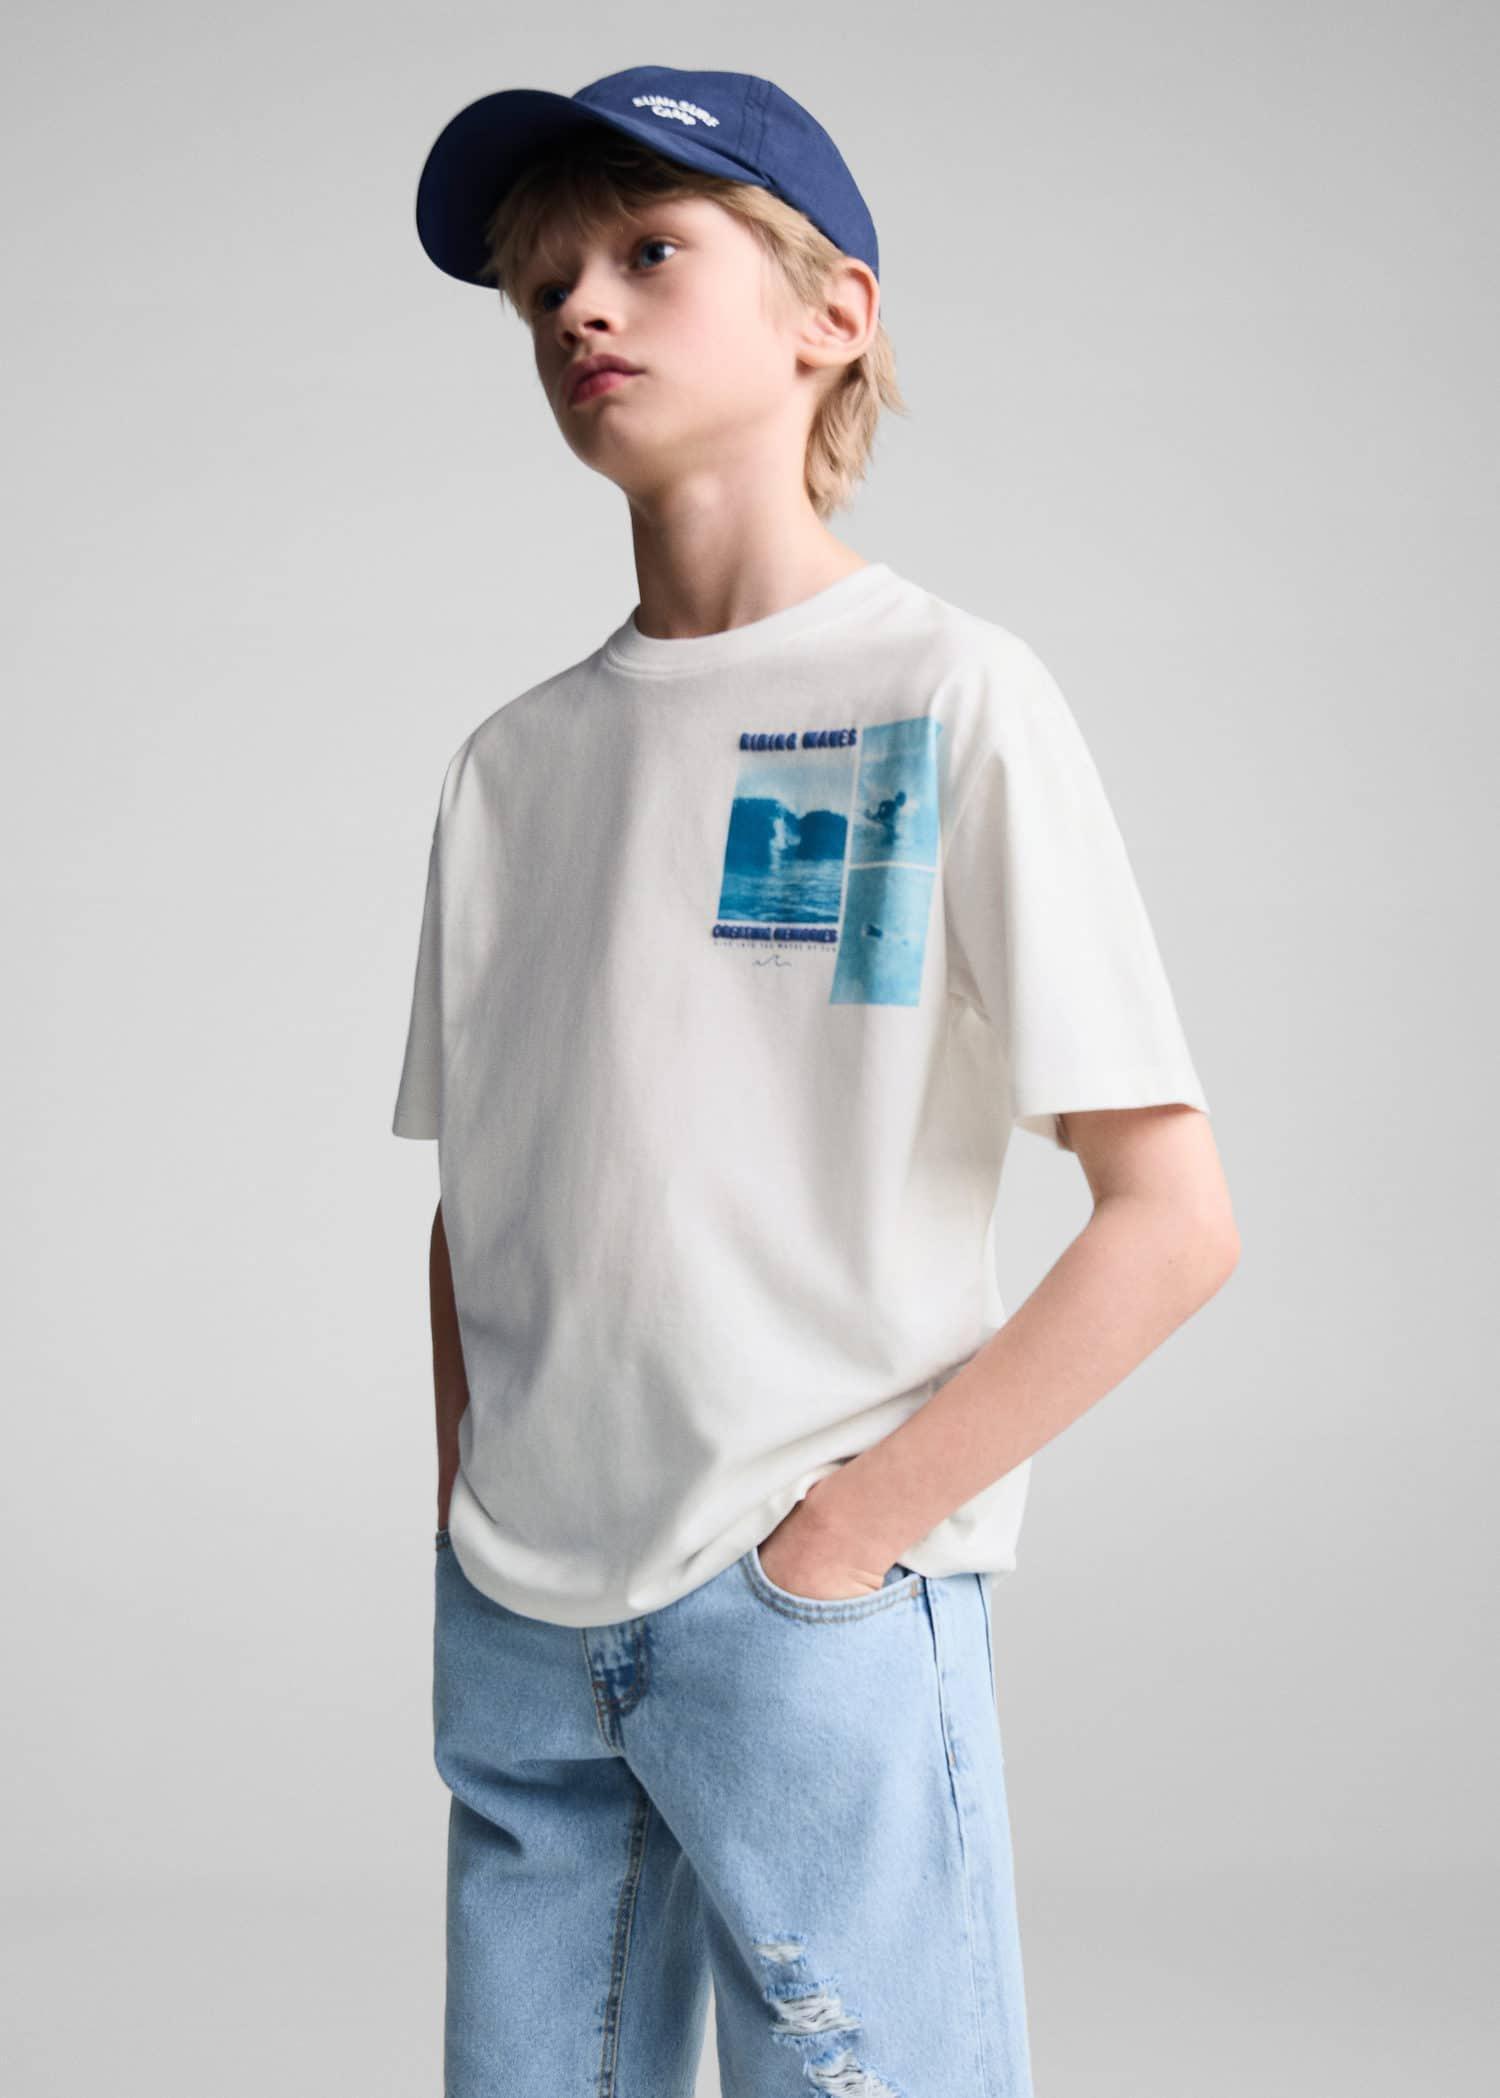 Mango - White Printed T-Shirt, Kids Boys